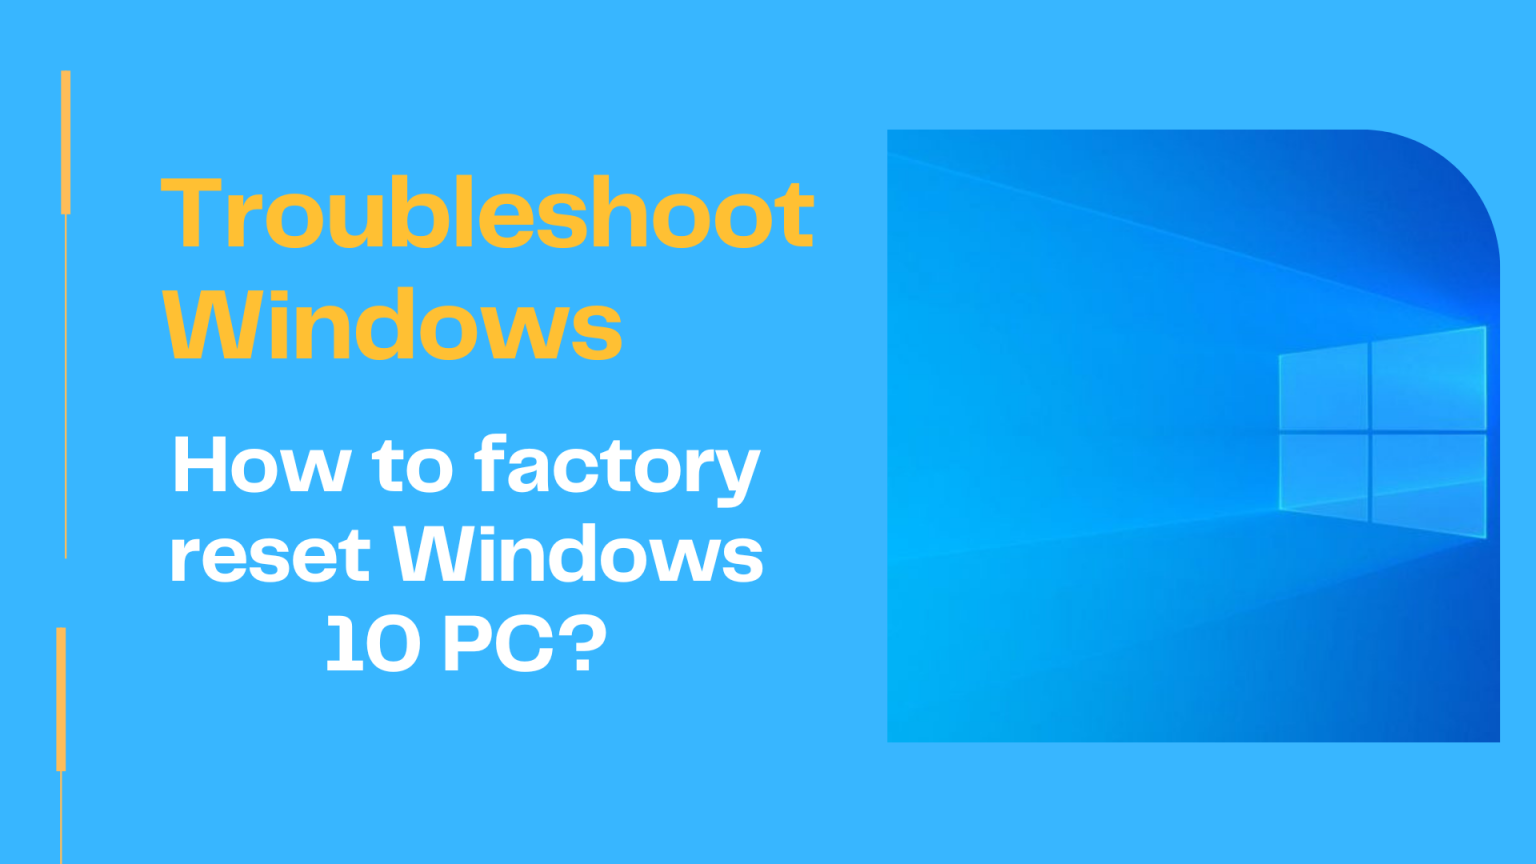 Troubleshoot windows: how to factory reset windows 10 pc?